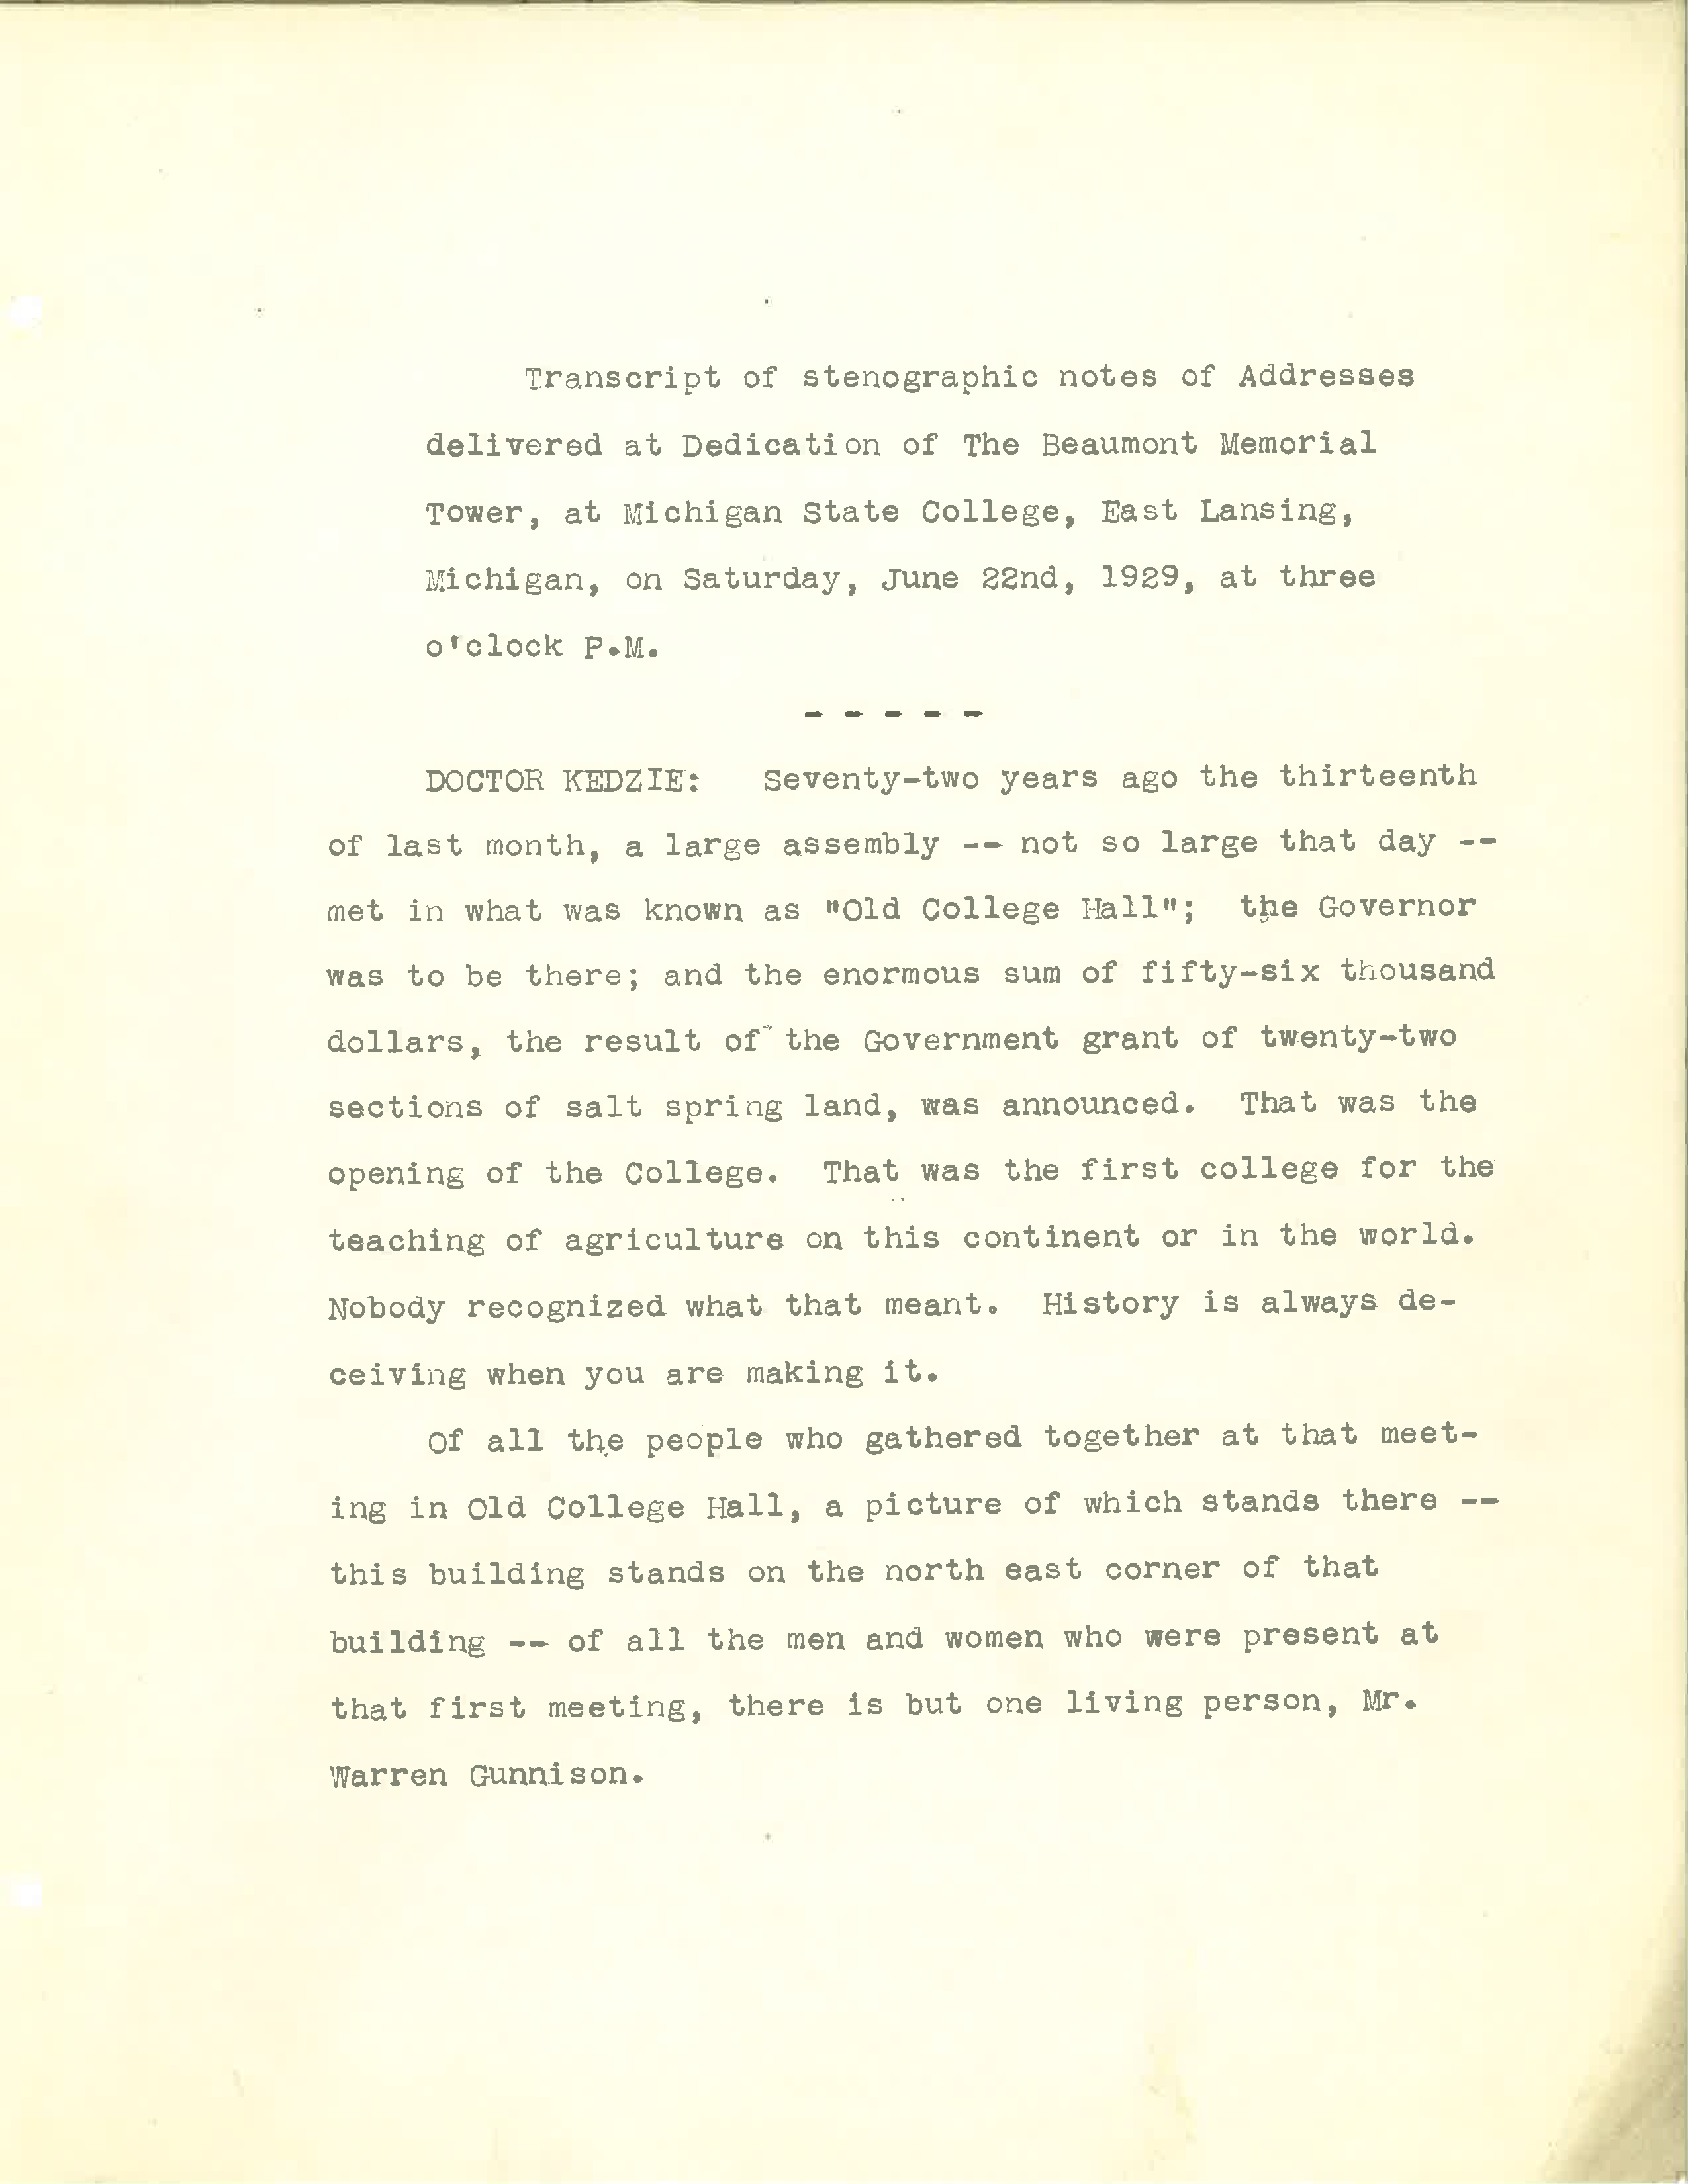 Transcript of Addresses Delivered at Dedication of Beaumont Tower; June 22, 1929